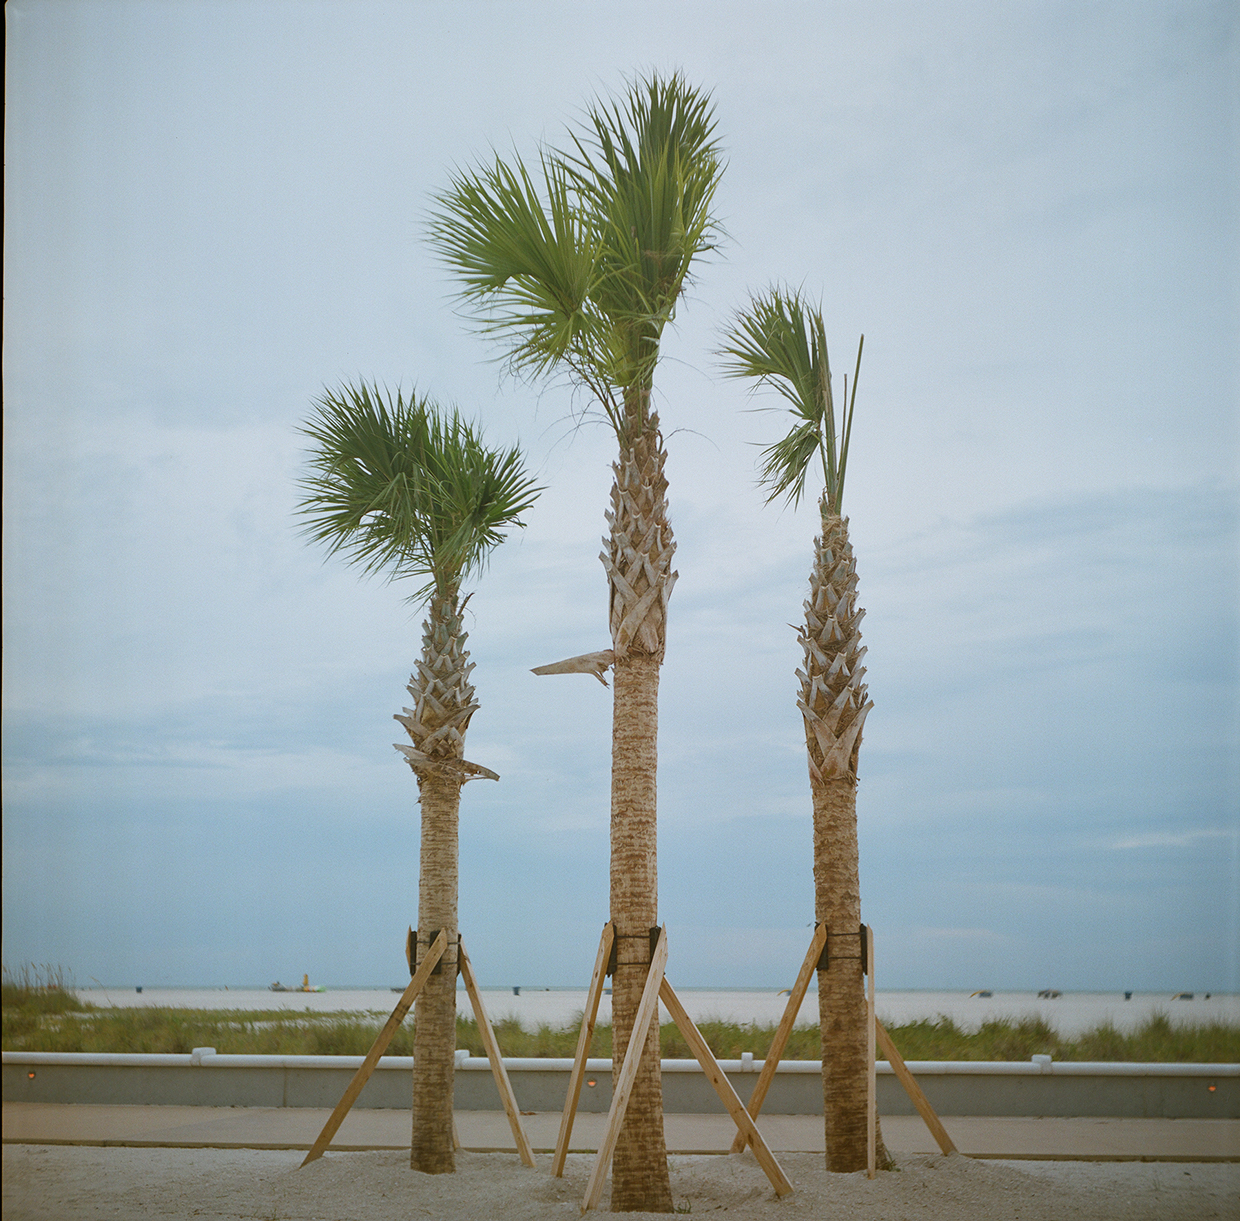  Treasure Island,  St. Petersburg, FL. July, 2014 